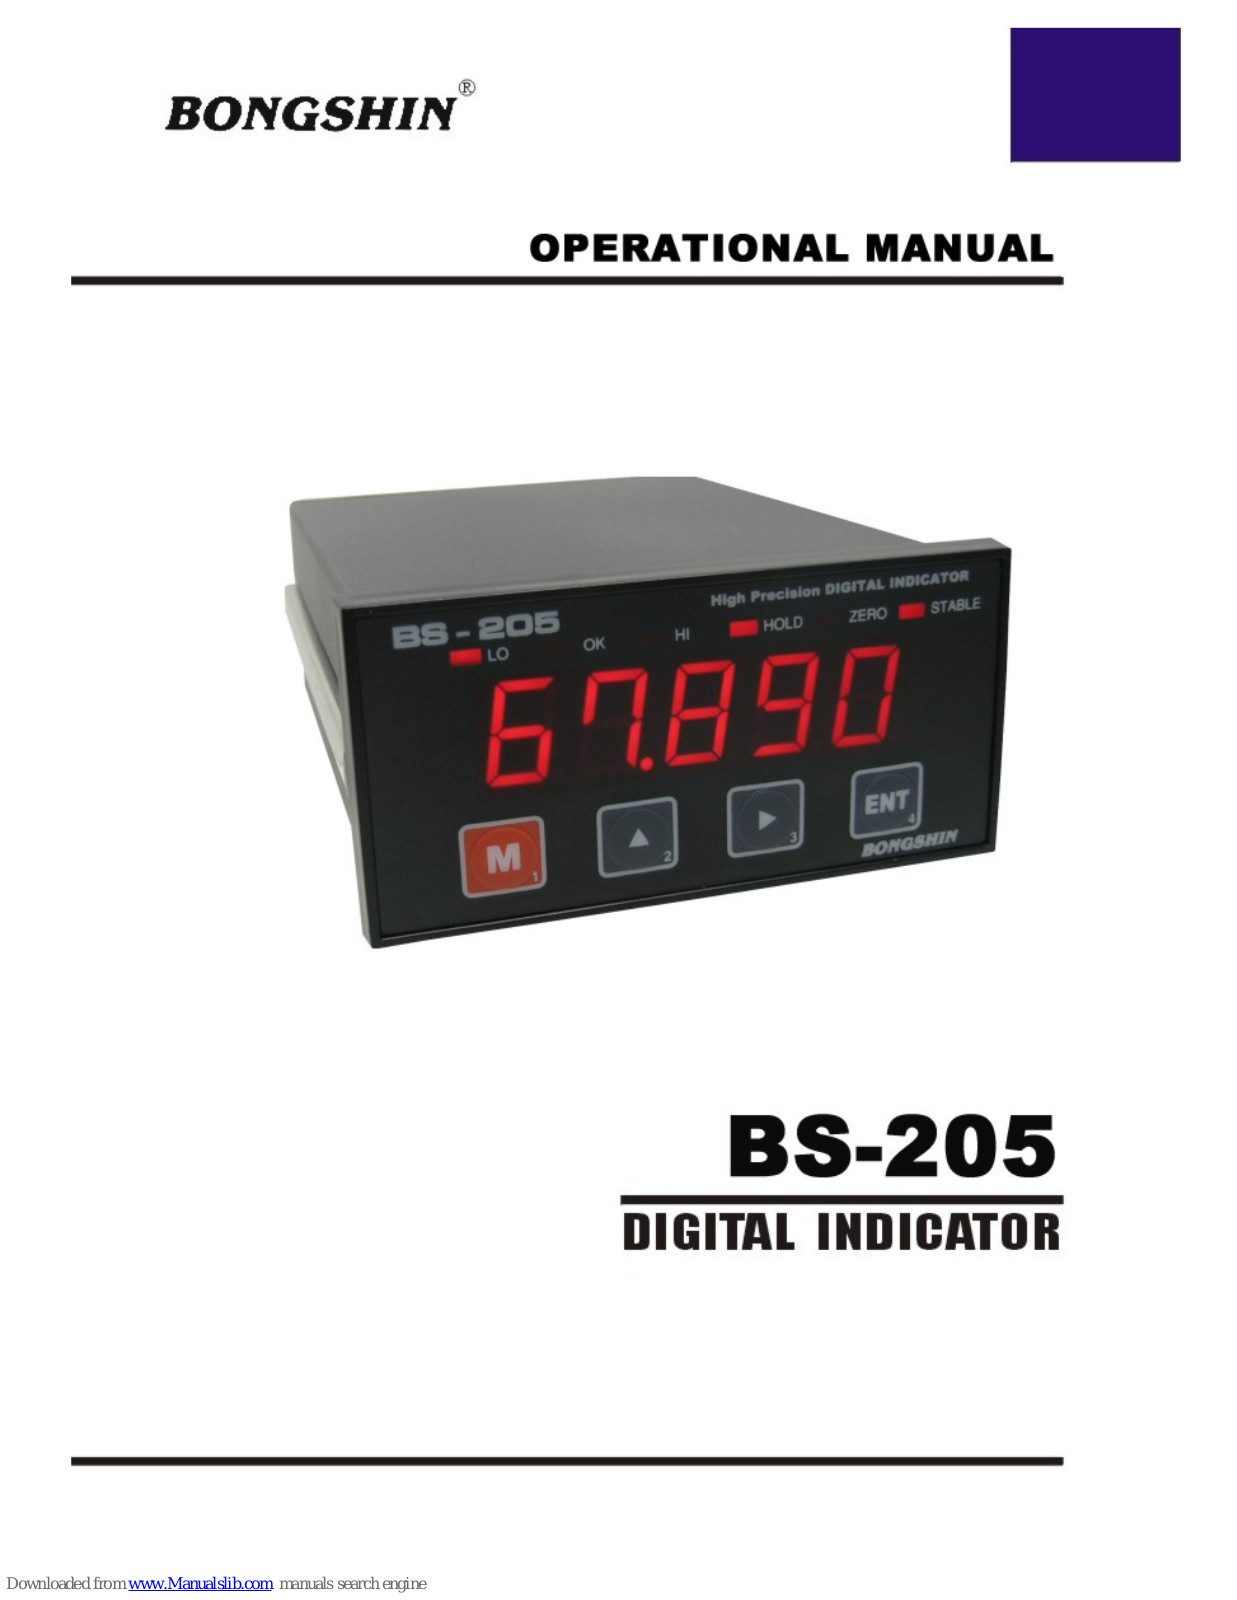 Bongshin BS-205 Operation Manuals